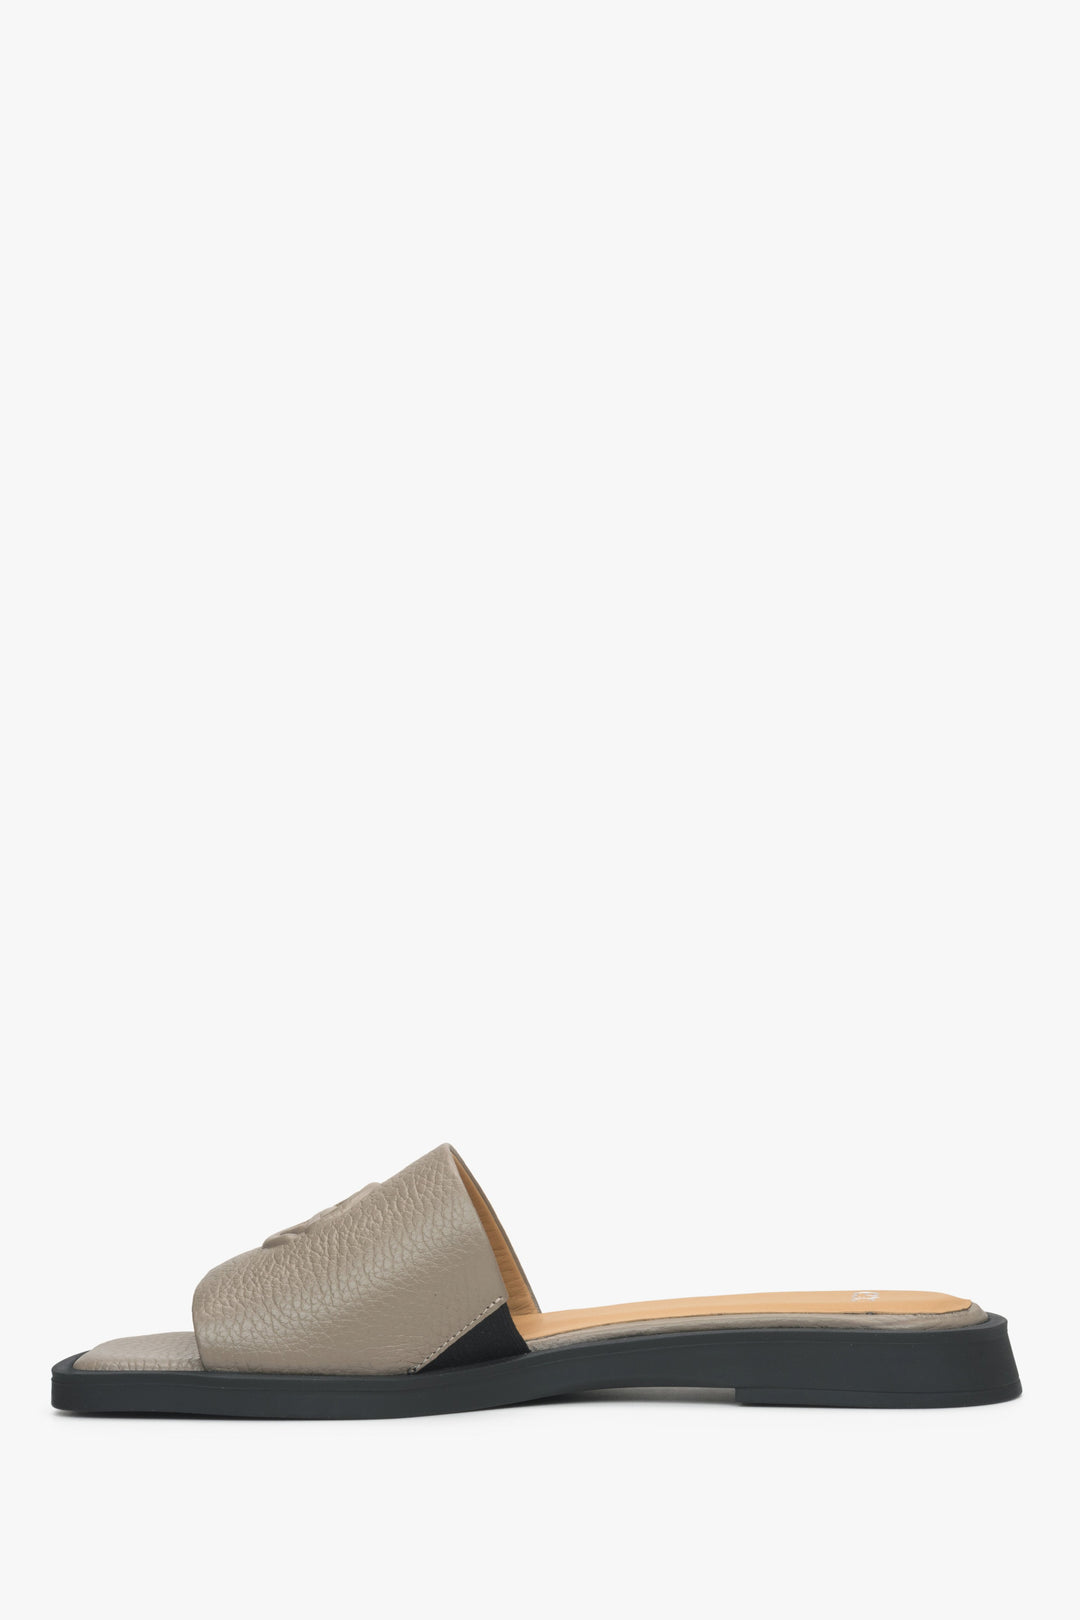 Women's grey leather flat sandals by Estro - shoe profile.